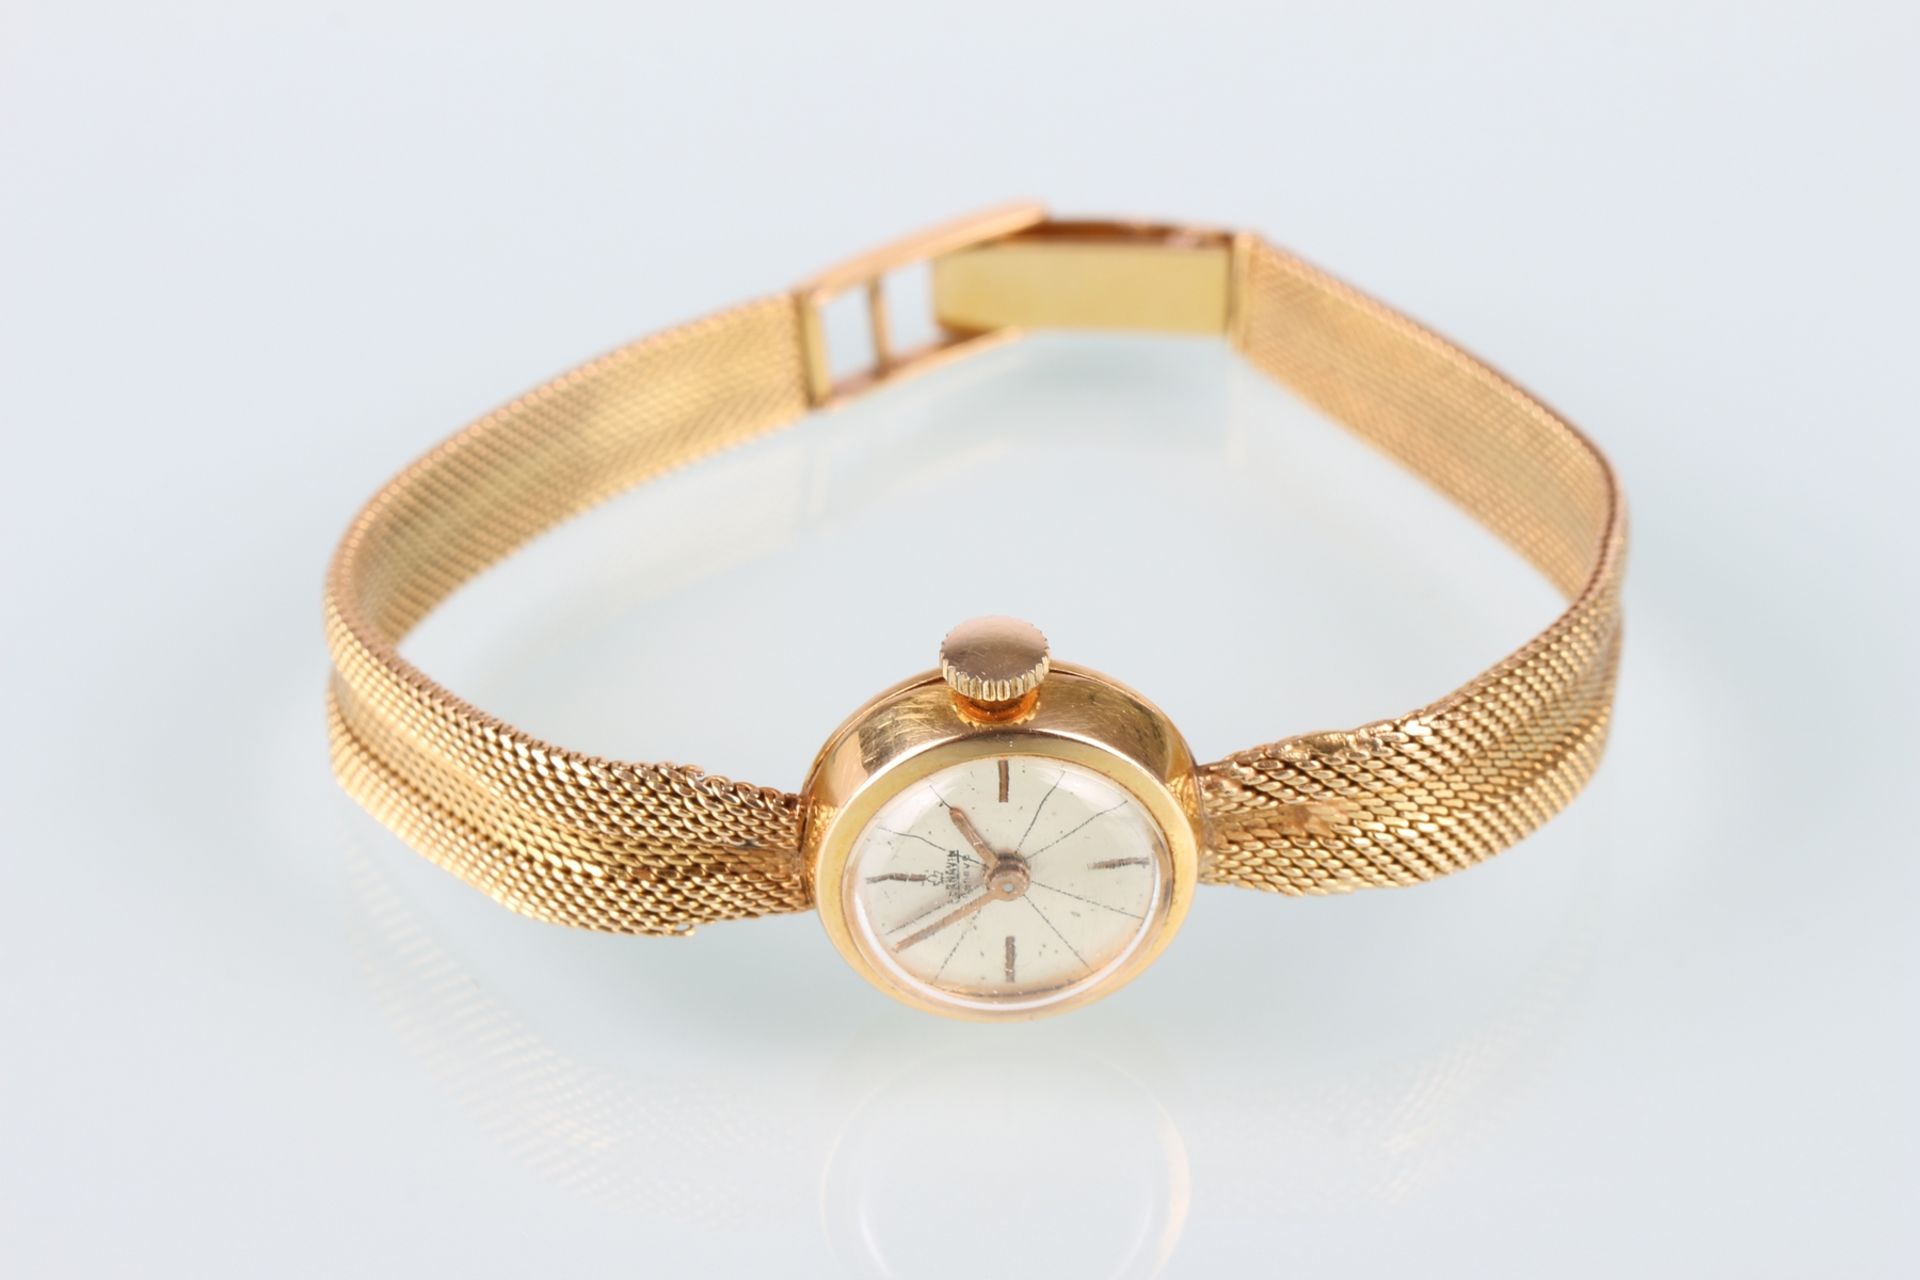 750 Gold Cornavin Geneve Armbanduhr, 18K gold wristwatch, - Image 3 of 6